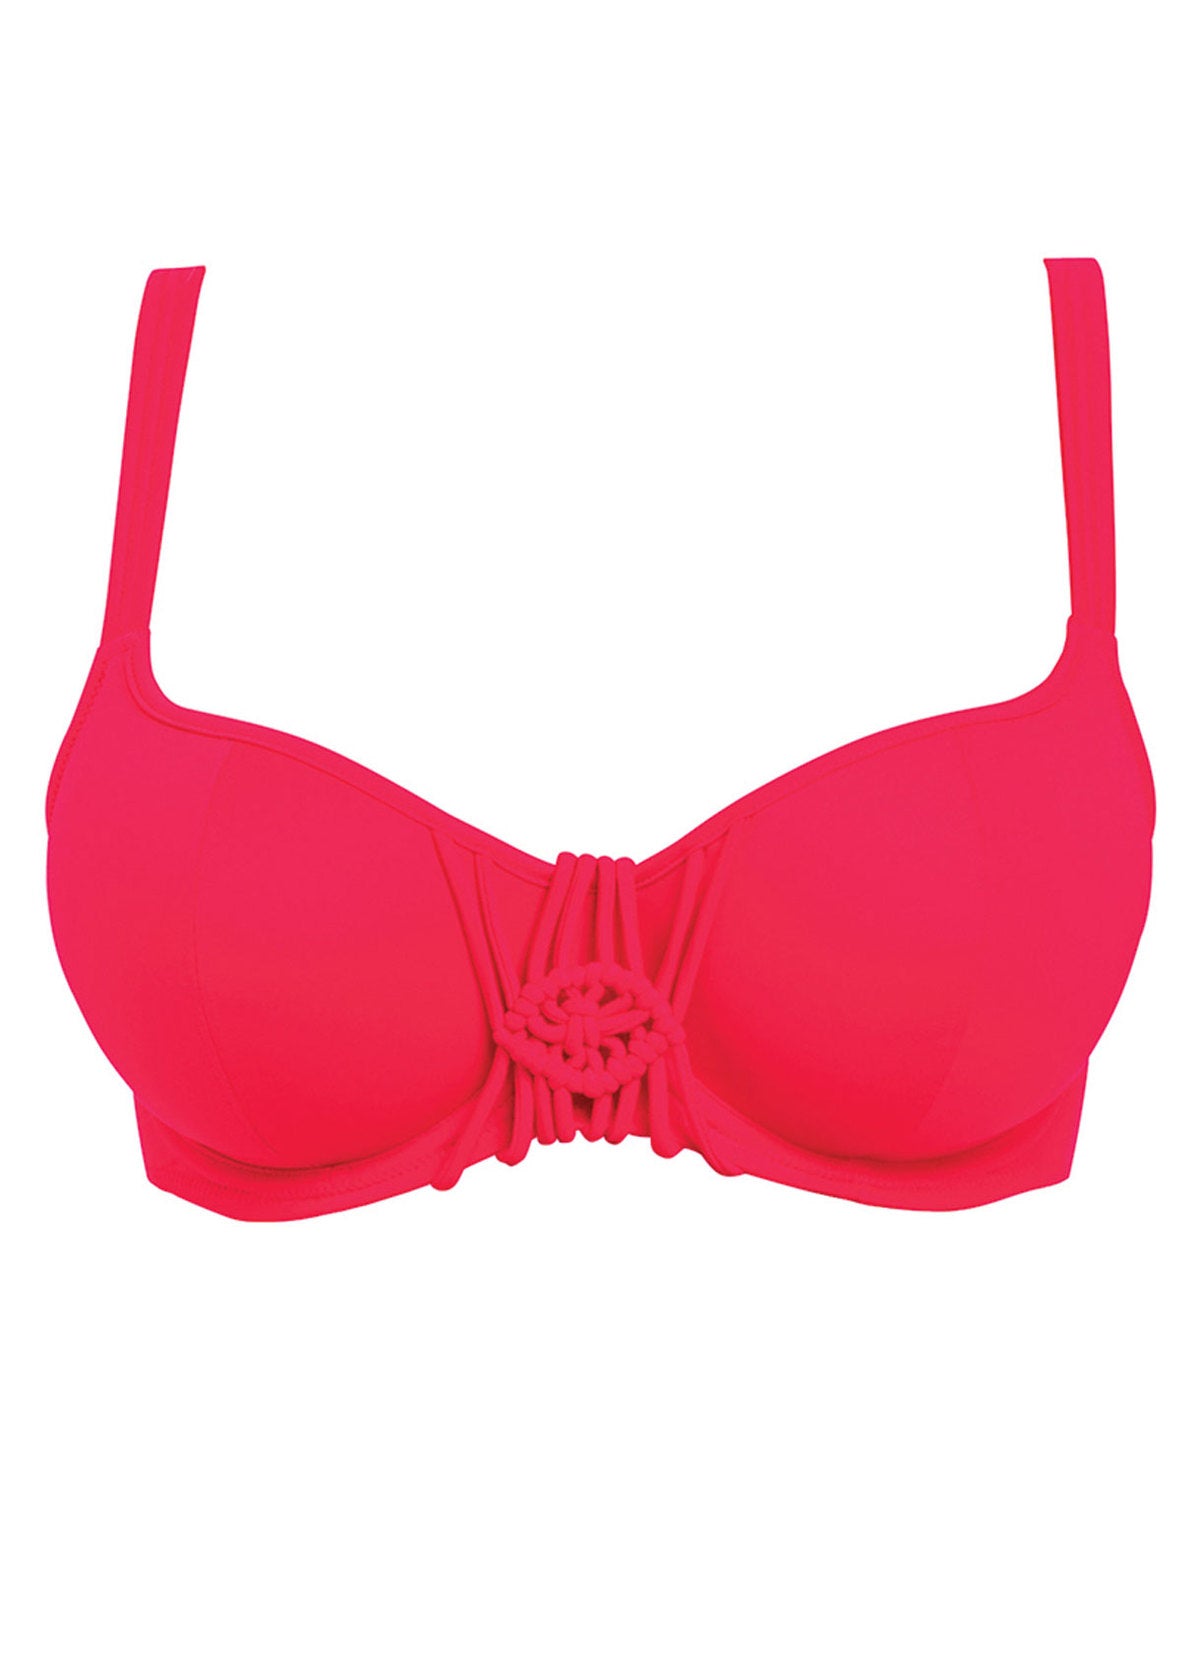 Maui X Lolita Nadia Tie Back Strapless Red Bikini Top for Women, Adult,  Young Adult, & Tween (Medium)